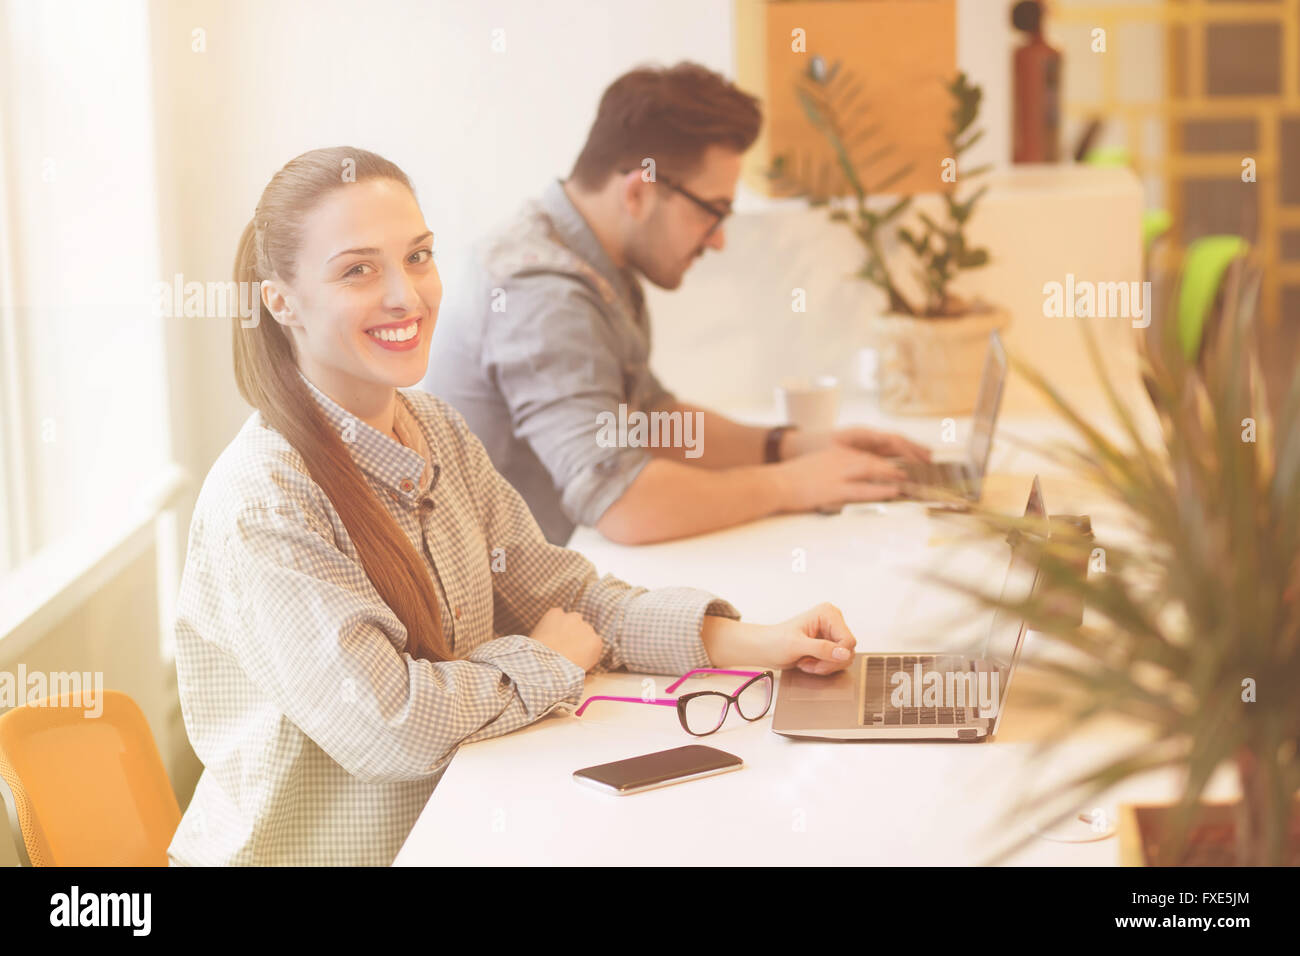 Freelance man and woman Stock Photo